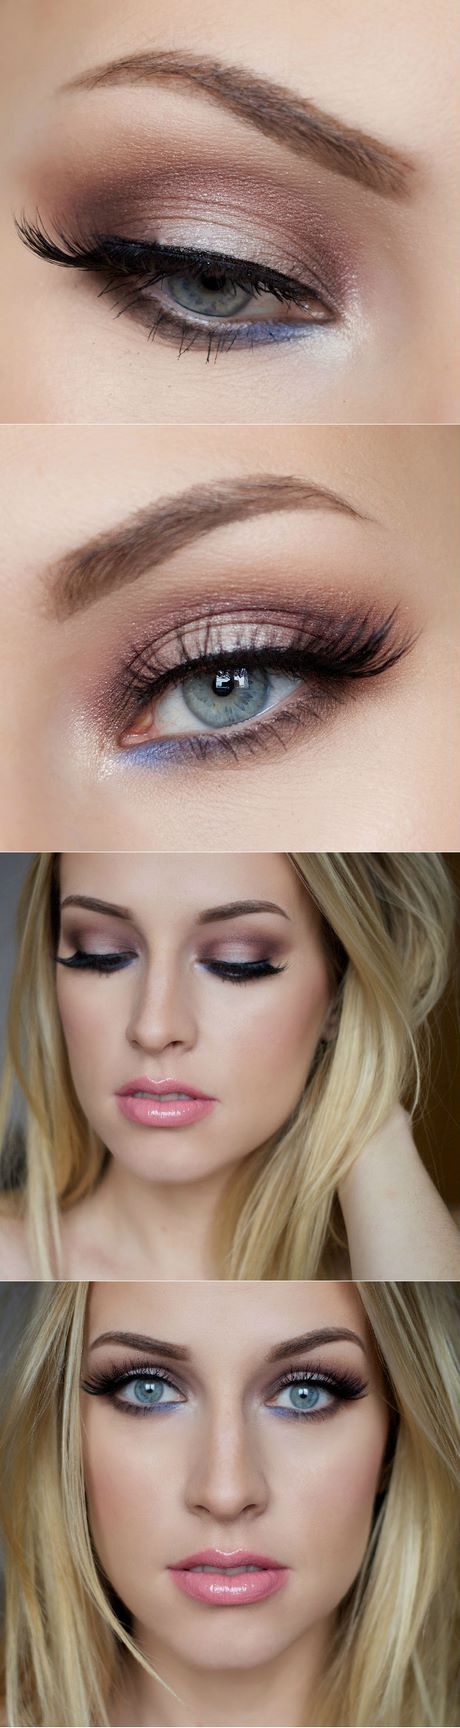 eyes-makeup-tutorial-for-big-eyes-52_4 Ogen make-up tutorial voor grote ogen